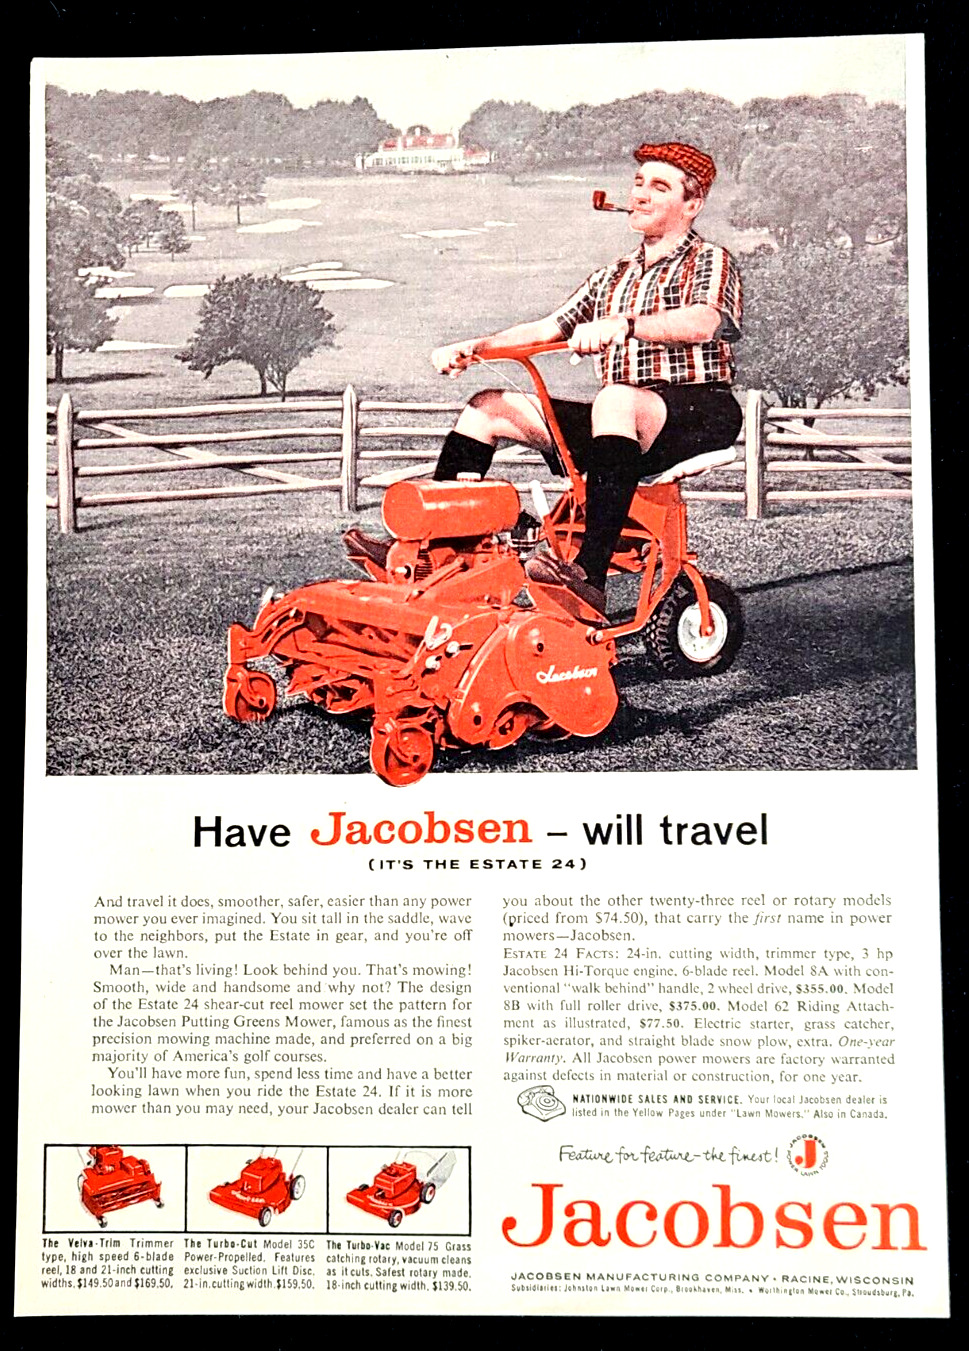 Jacobsen Putting Greens Mower Original 1959 Vintage Print Ad